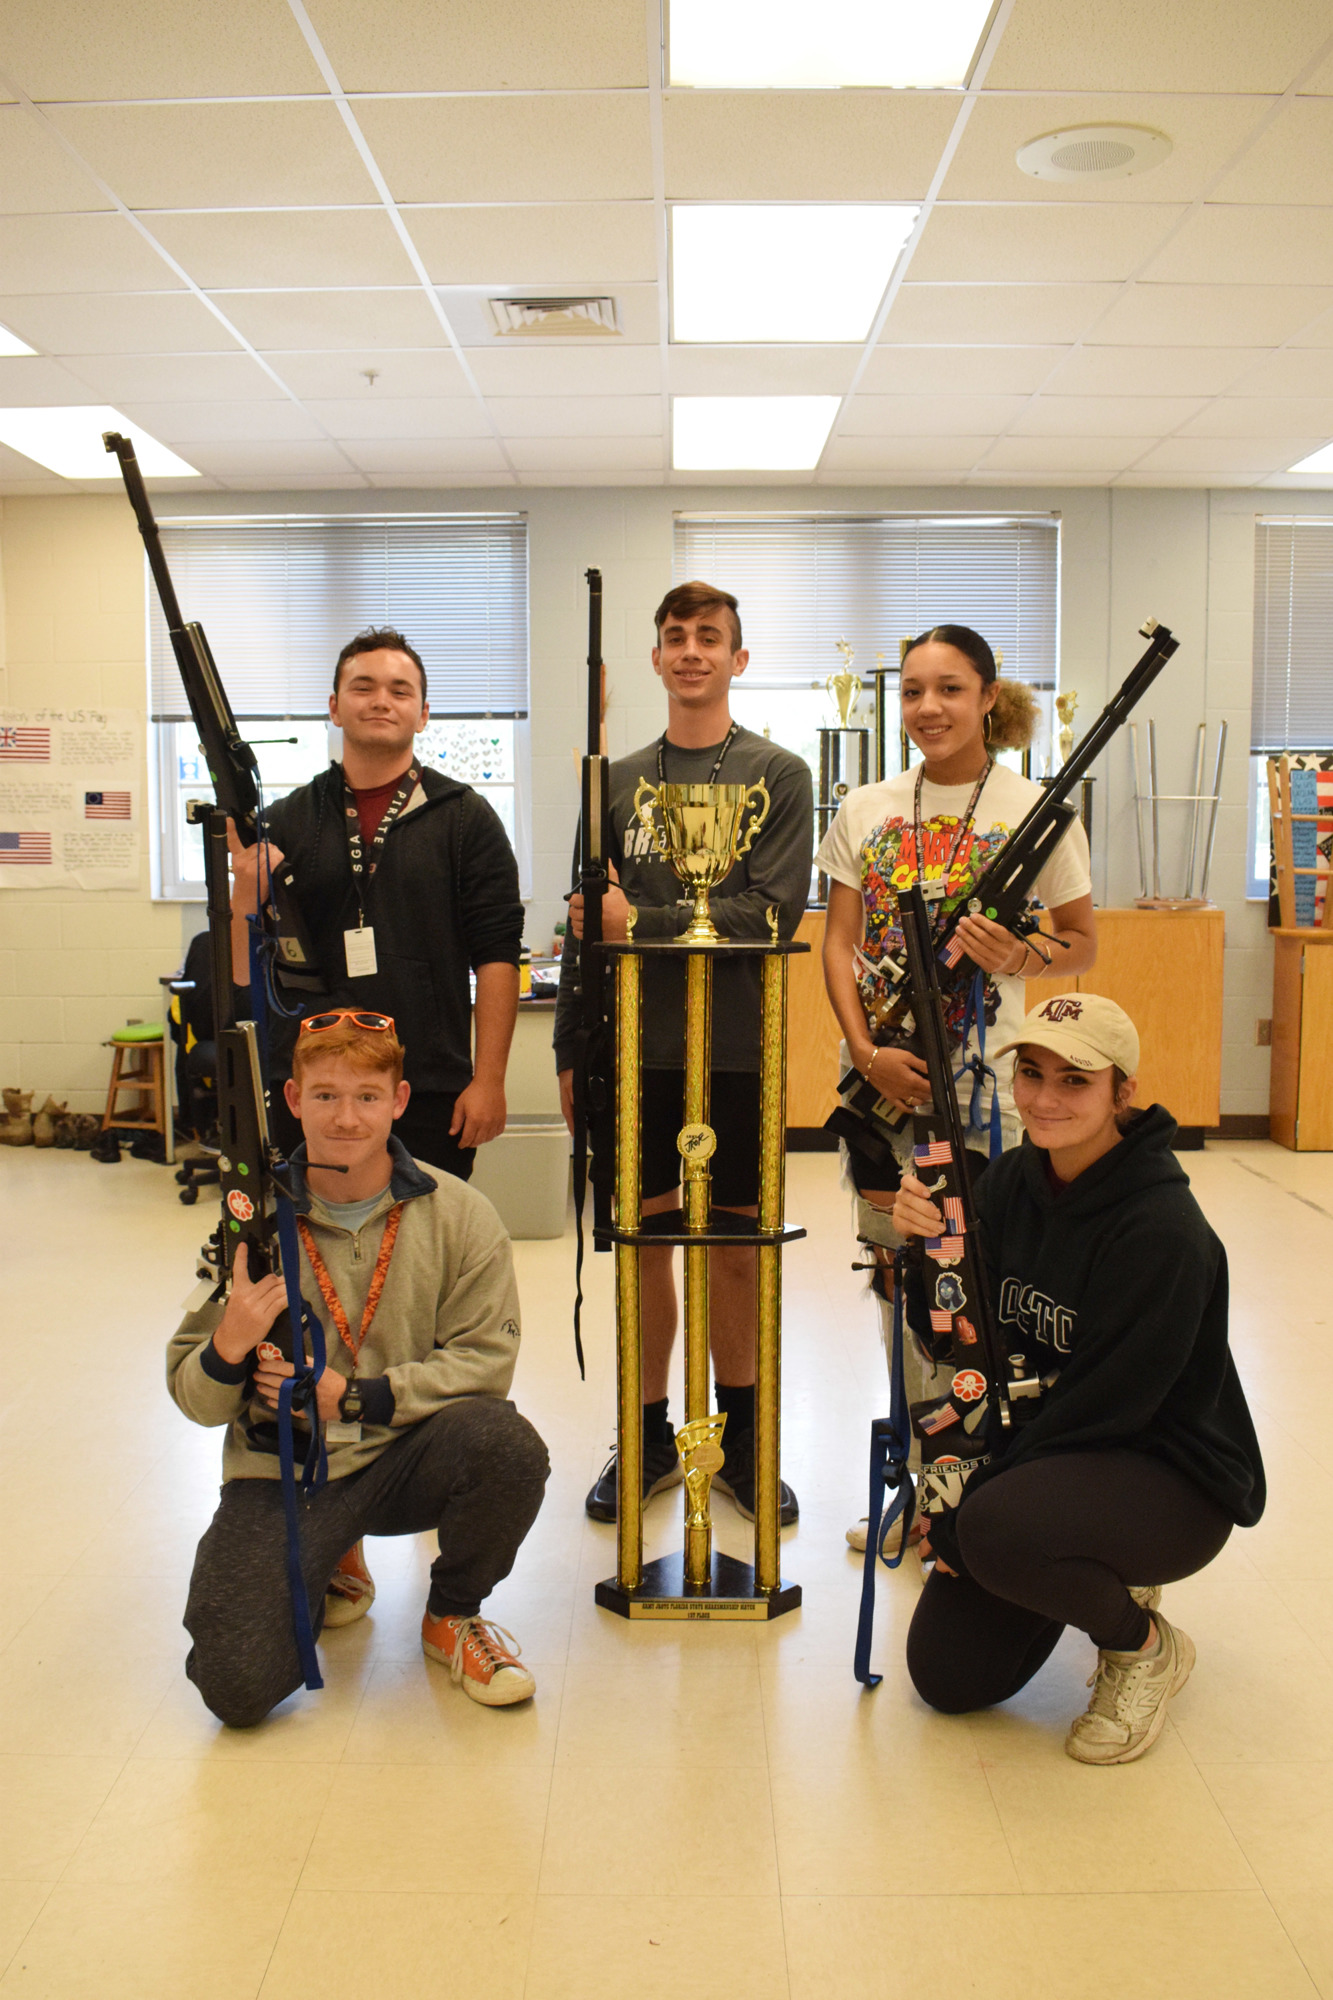 Braden River High School JROTC rifle team members Stuart Macaulay, Christian Bell, Nathan Walmsley, Adanna Wharton and Elayna Andrews celebrate their state championship title.